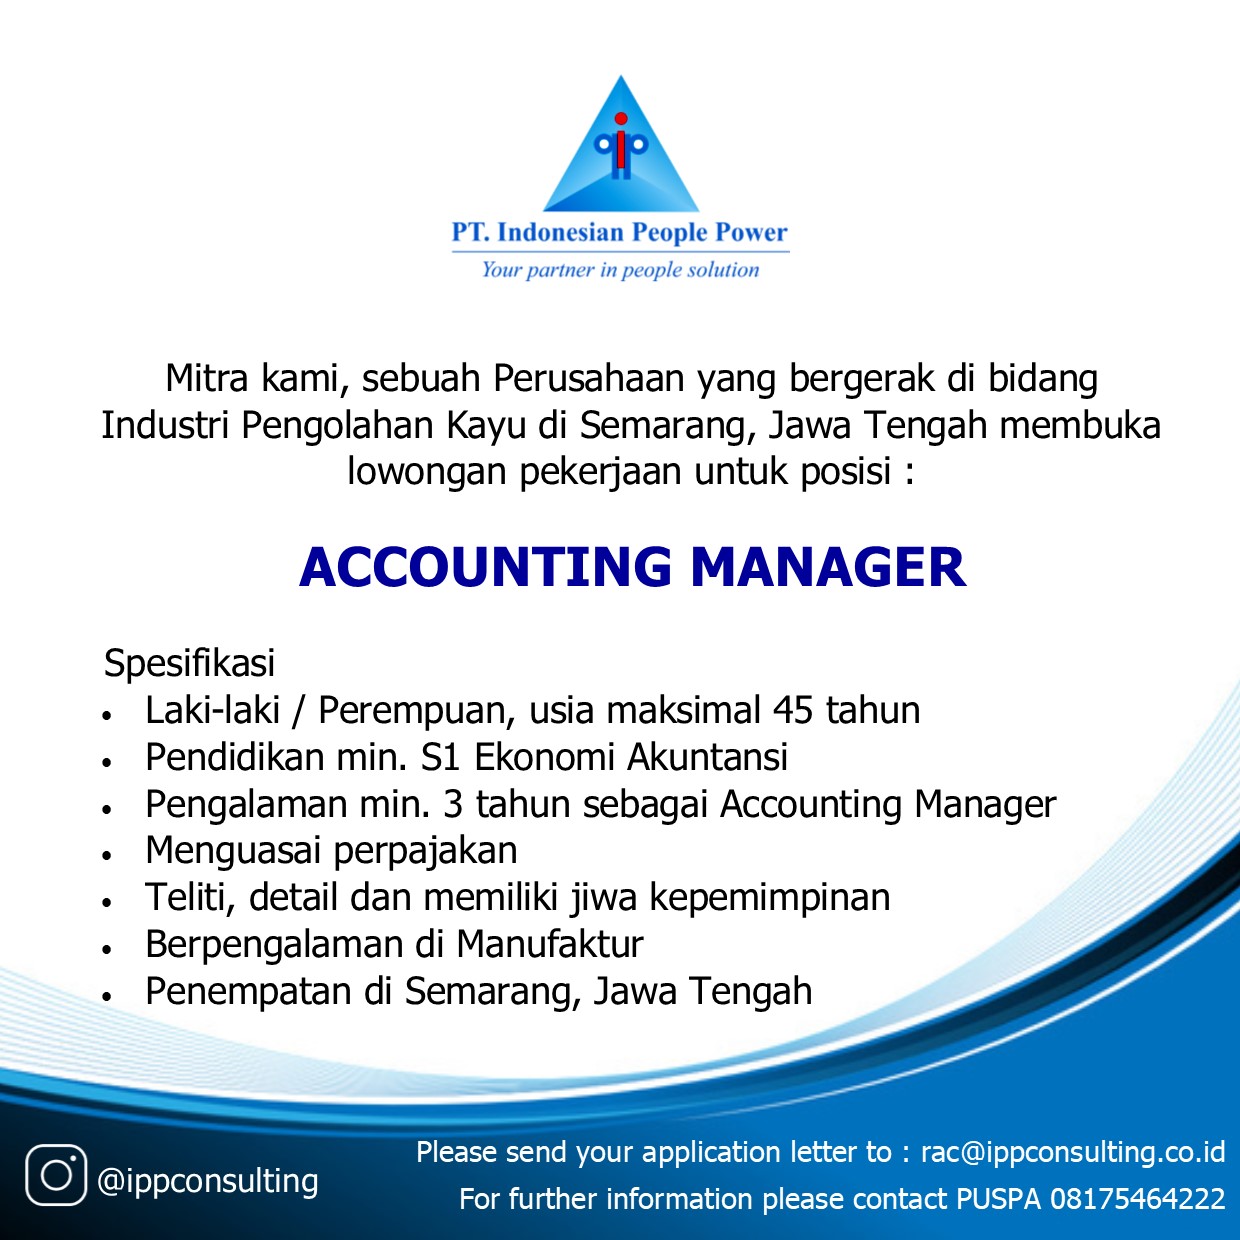 IPP Lowongan Accounting Manager